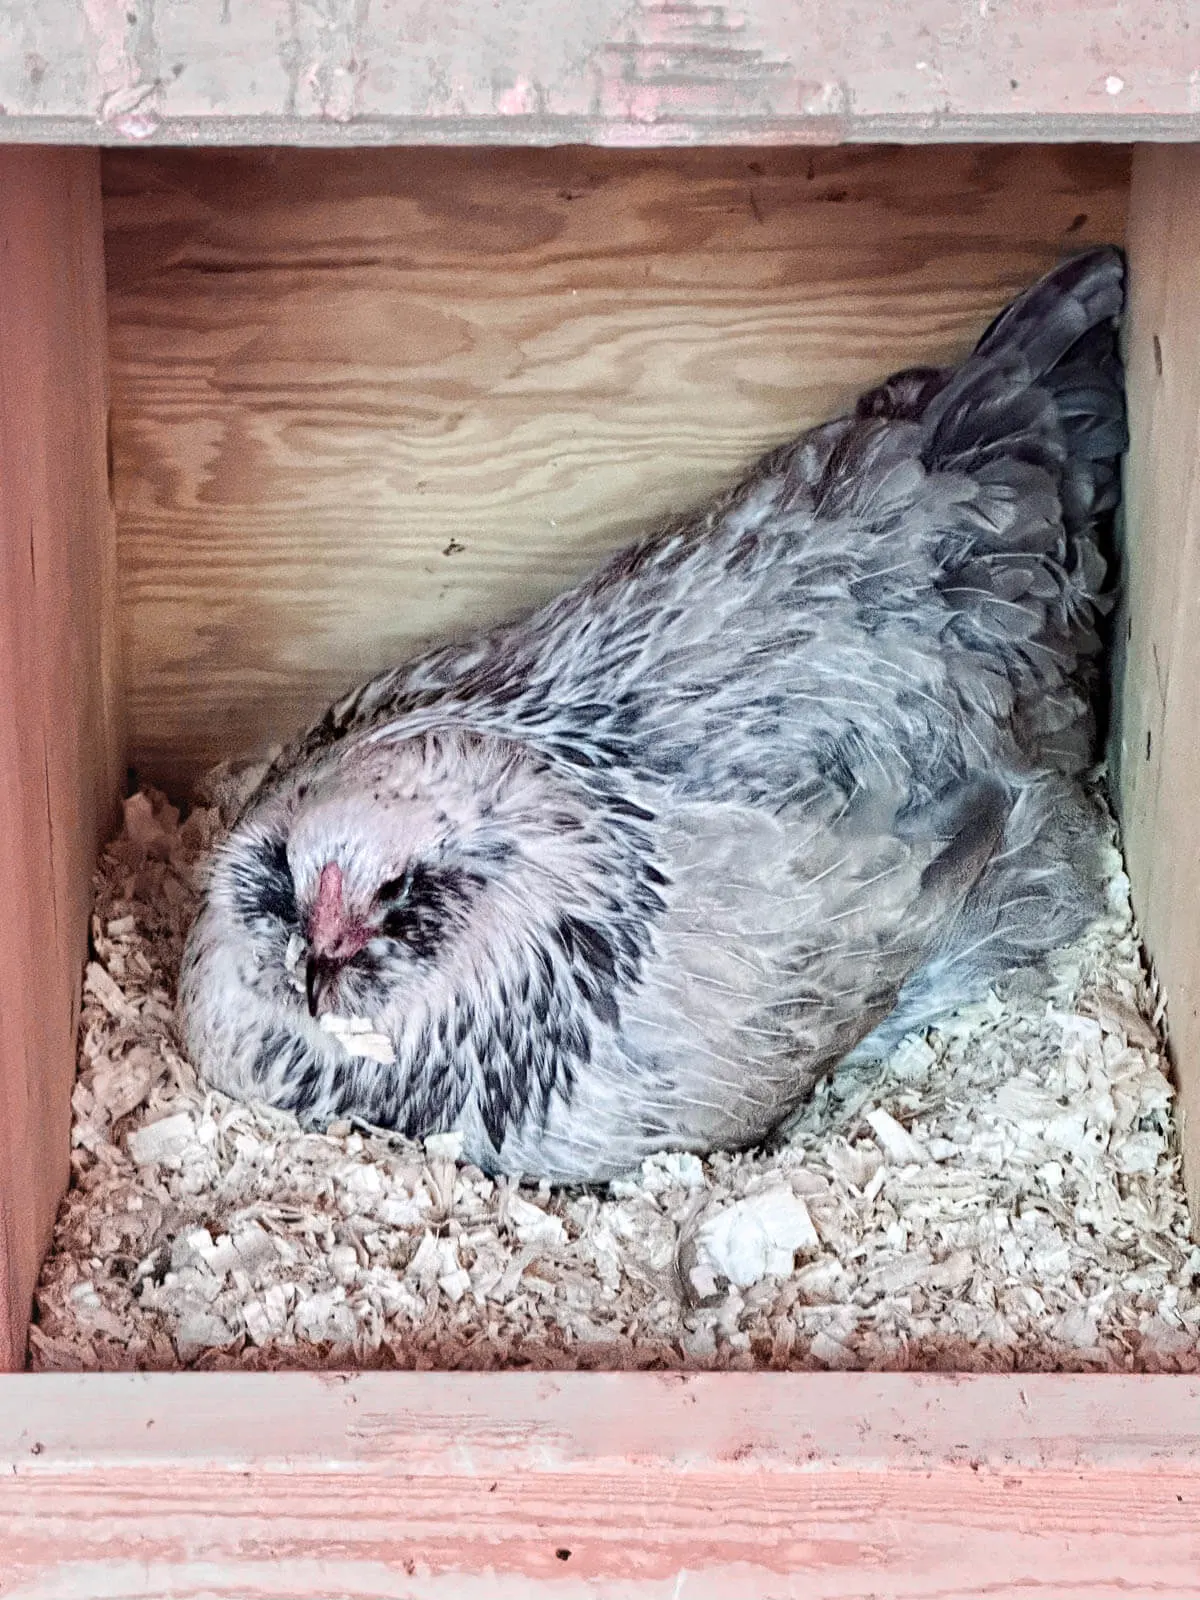 Olive egger in nesting box. 